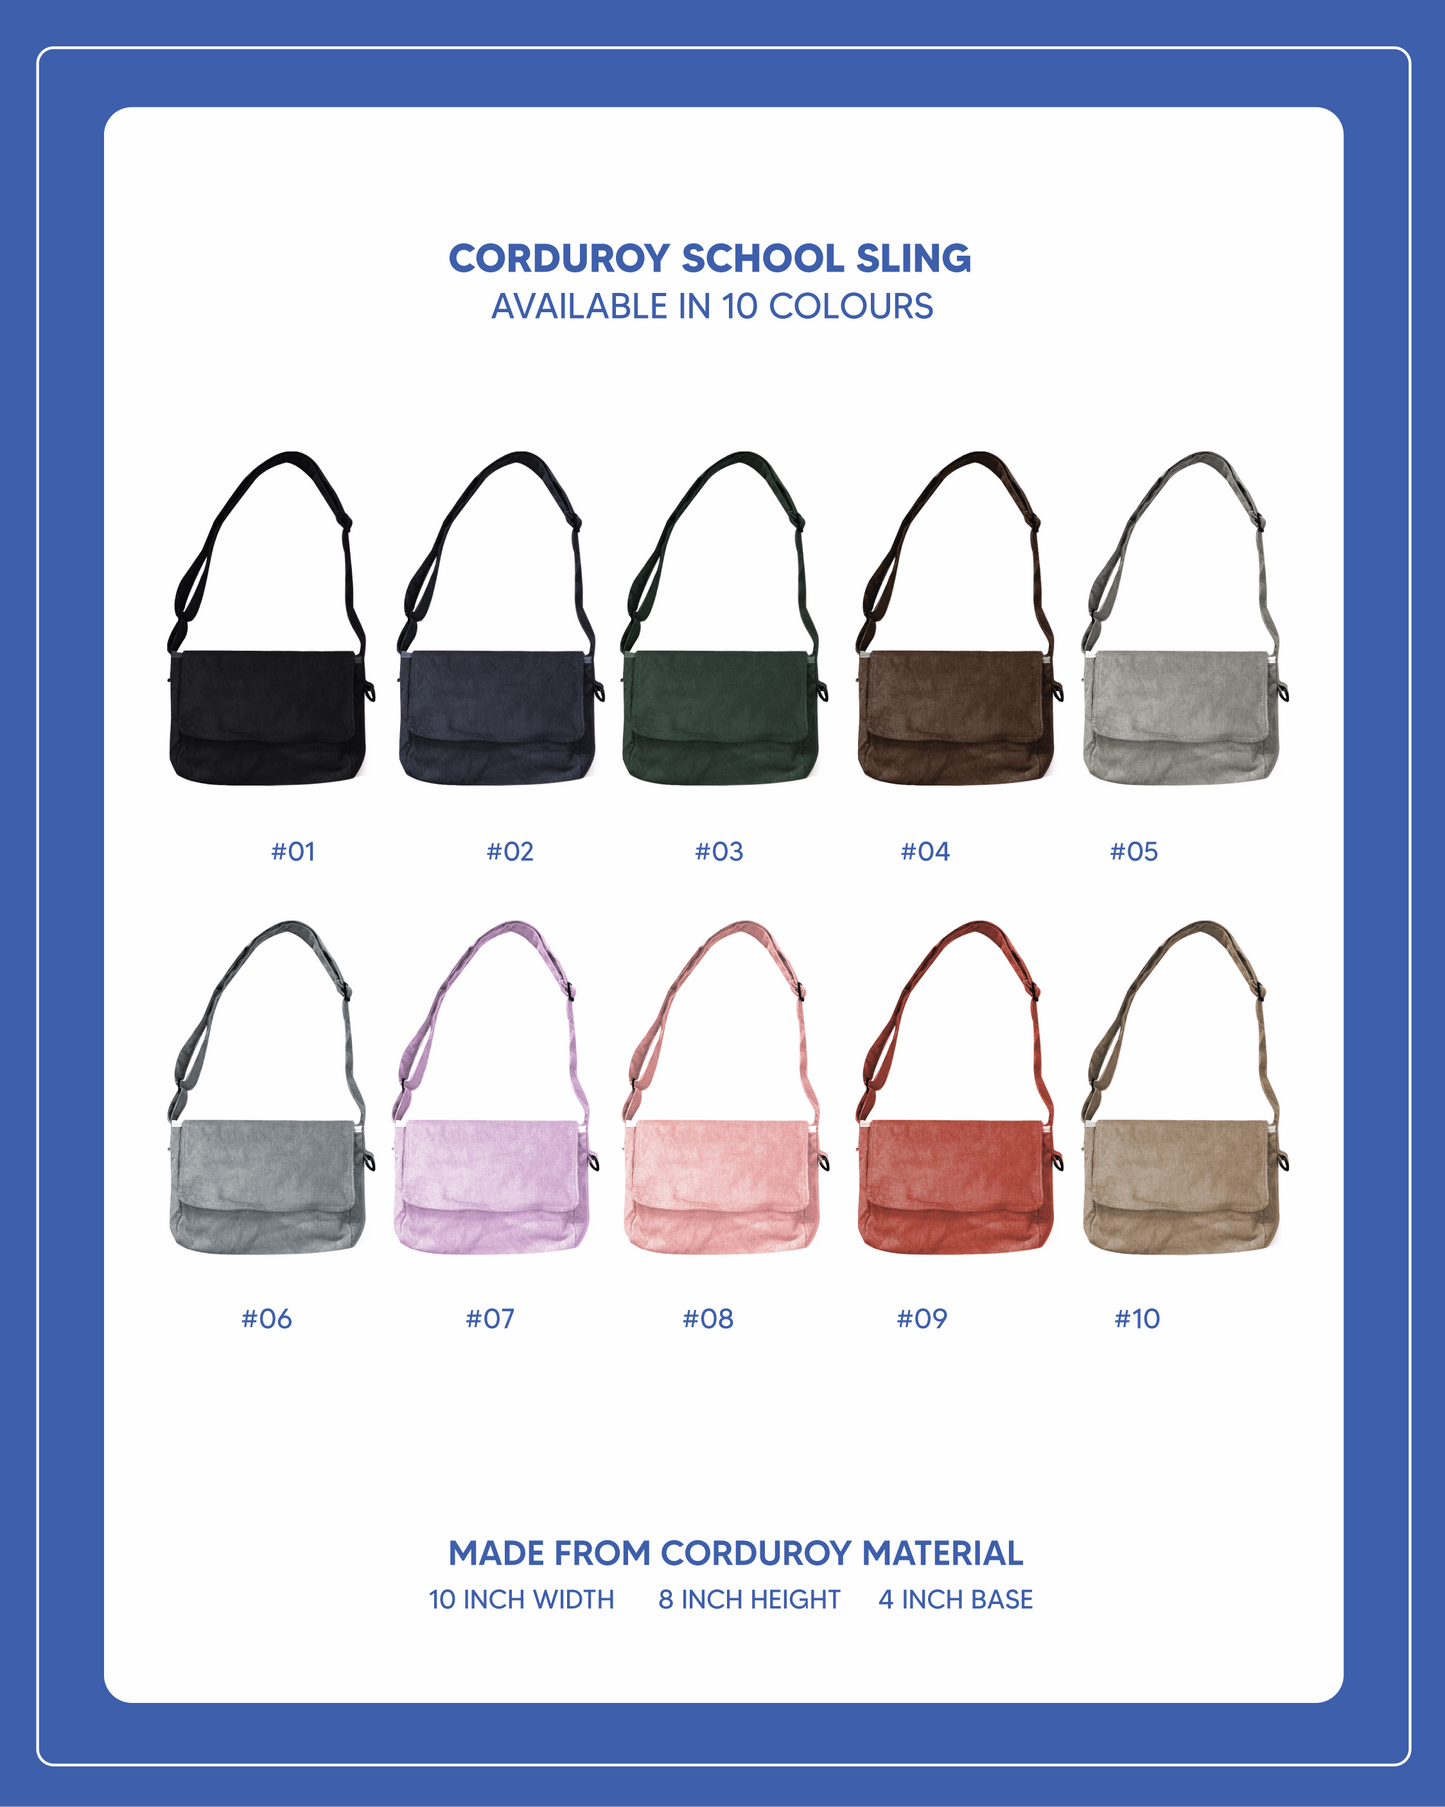 Corduroy Series - Mini/School Sling #09